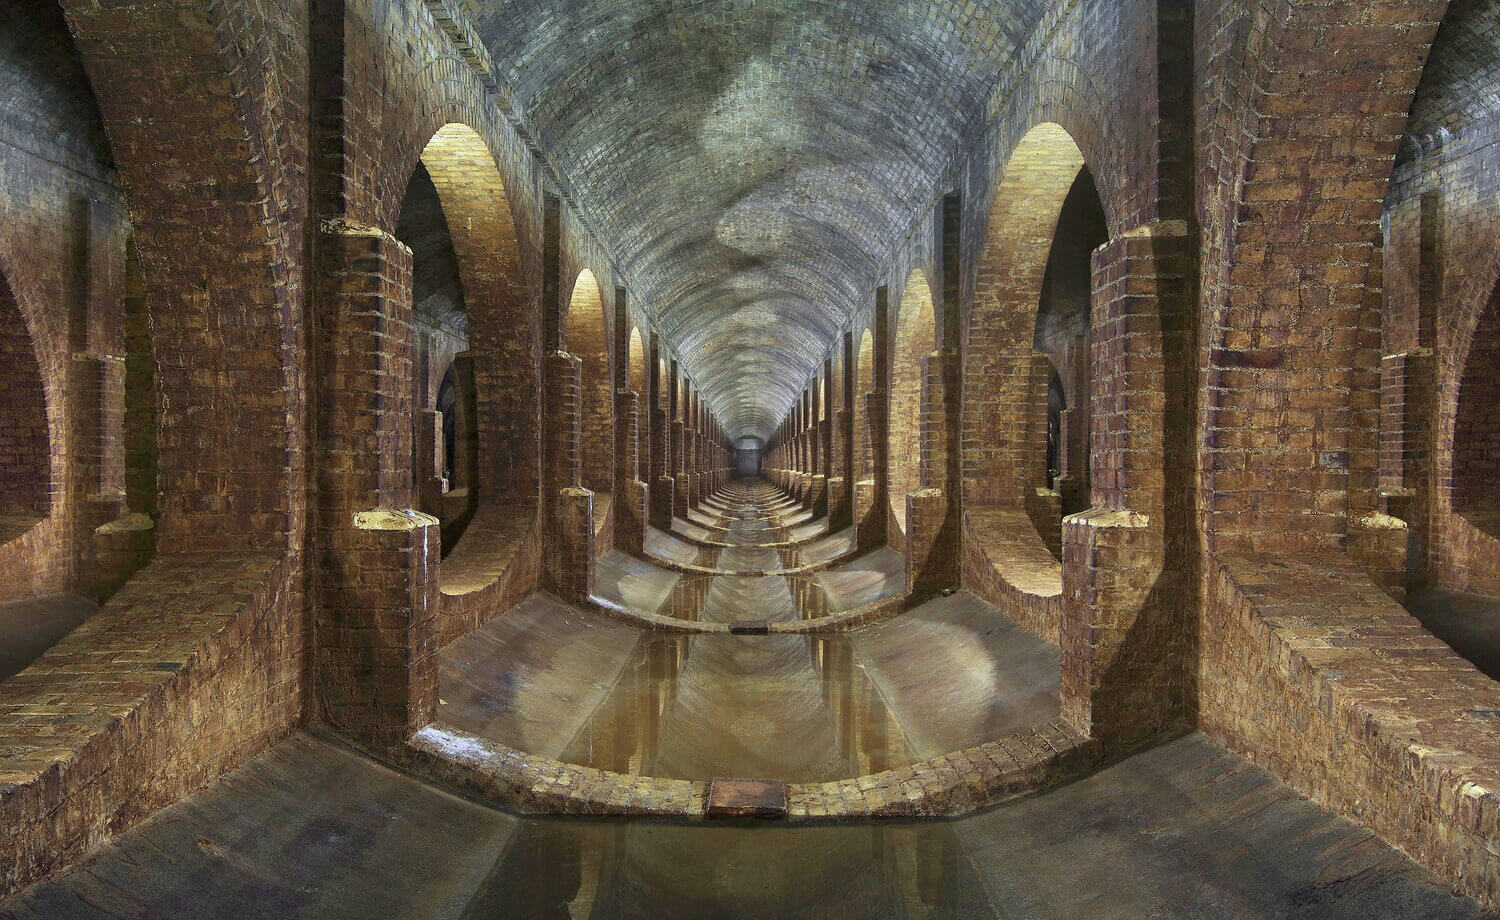 Matt Emmett's limited edition photograph of an underground water facility